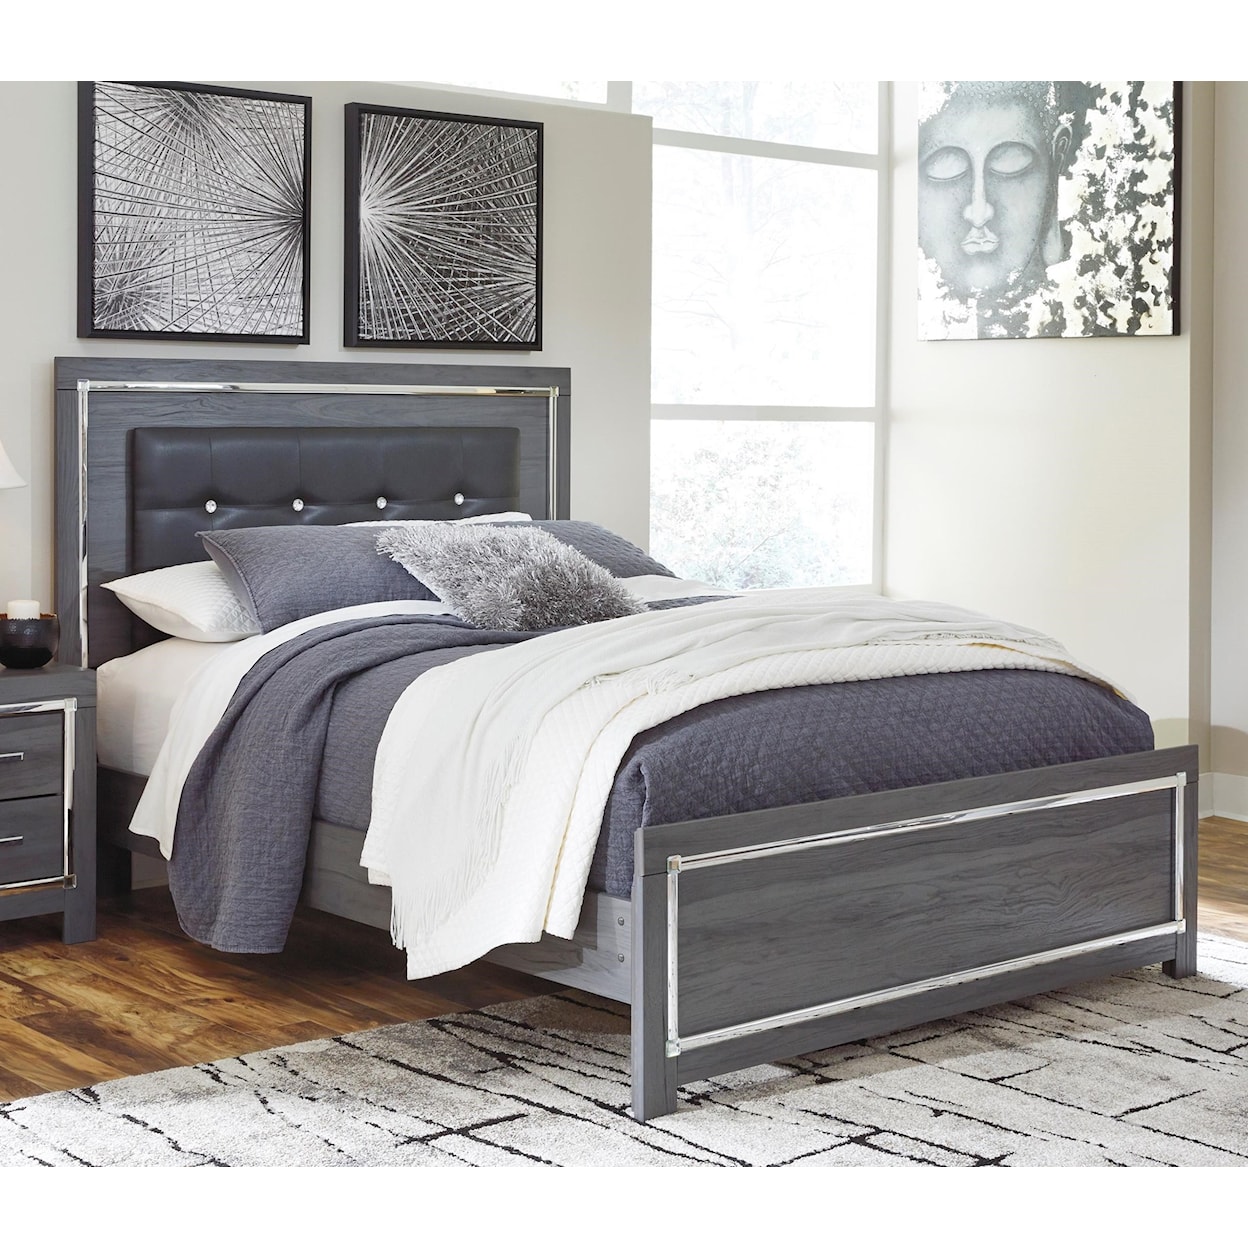 Ashley Furniture Signature Design Lodanna Full Upholstered Bed